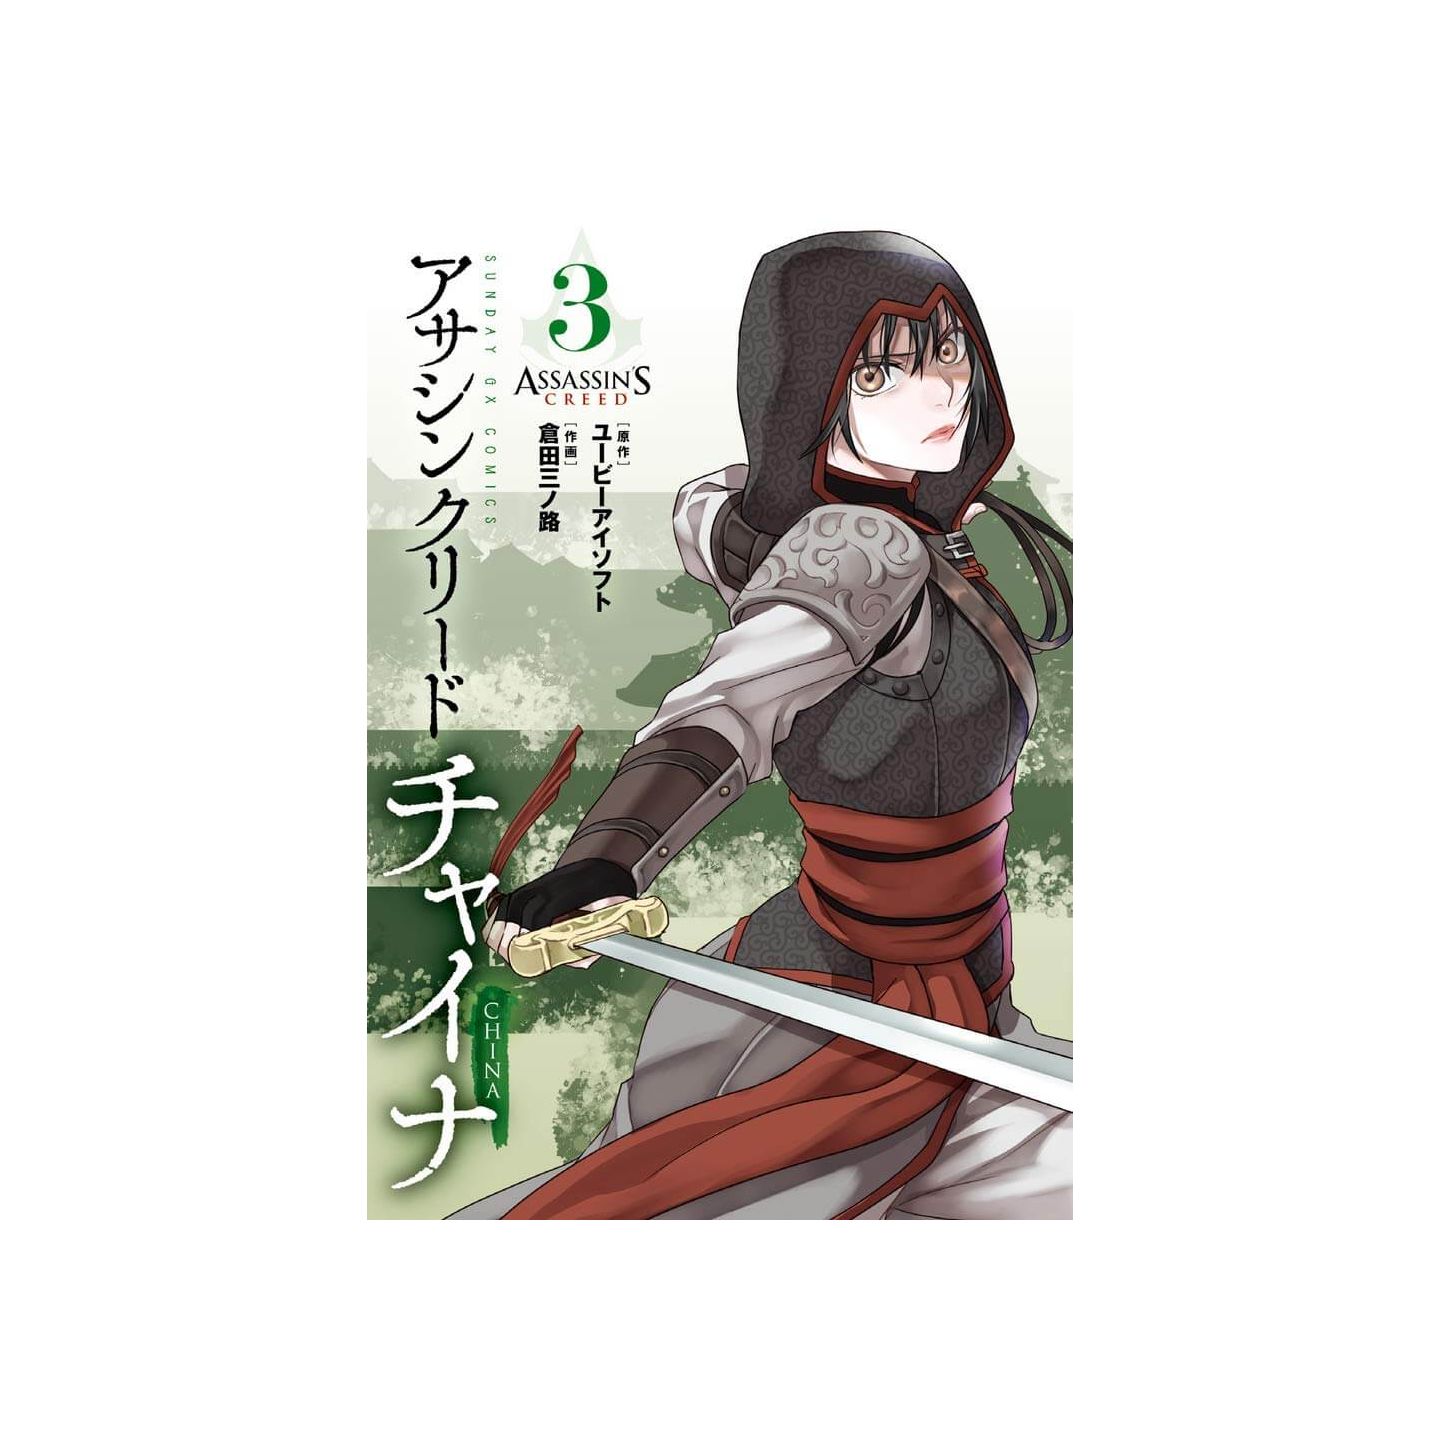 Assassin's Creed: Blade of Shao Jun, Vol. 2 (2) by Minoji Kurata